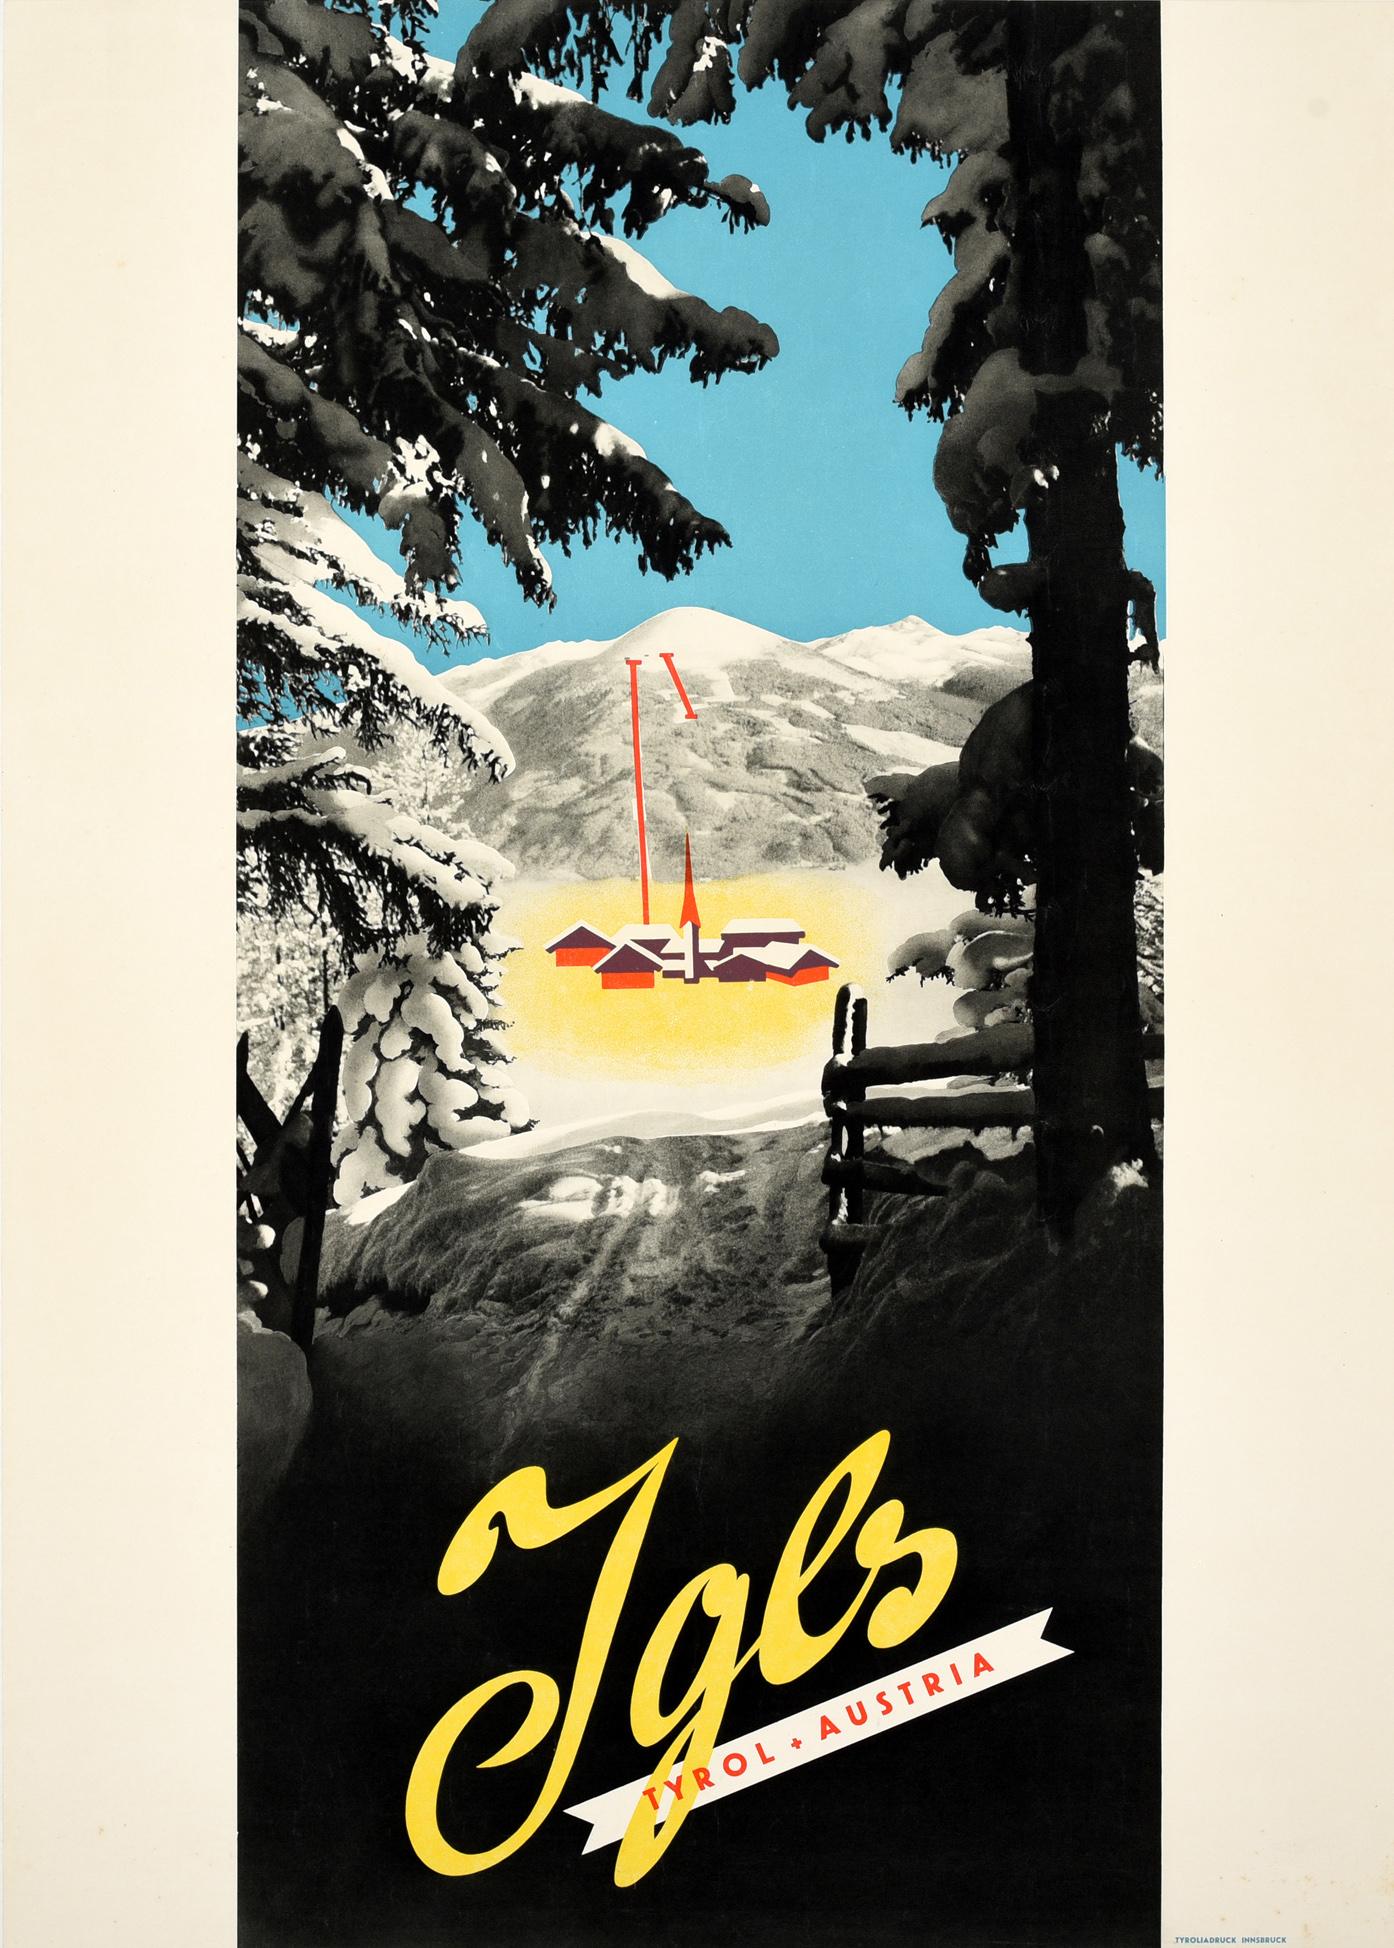 Unknown Print - Original Vintage Poster For Igls Tyrol Austria Winter Sport Skiing Mountain Alps